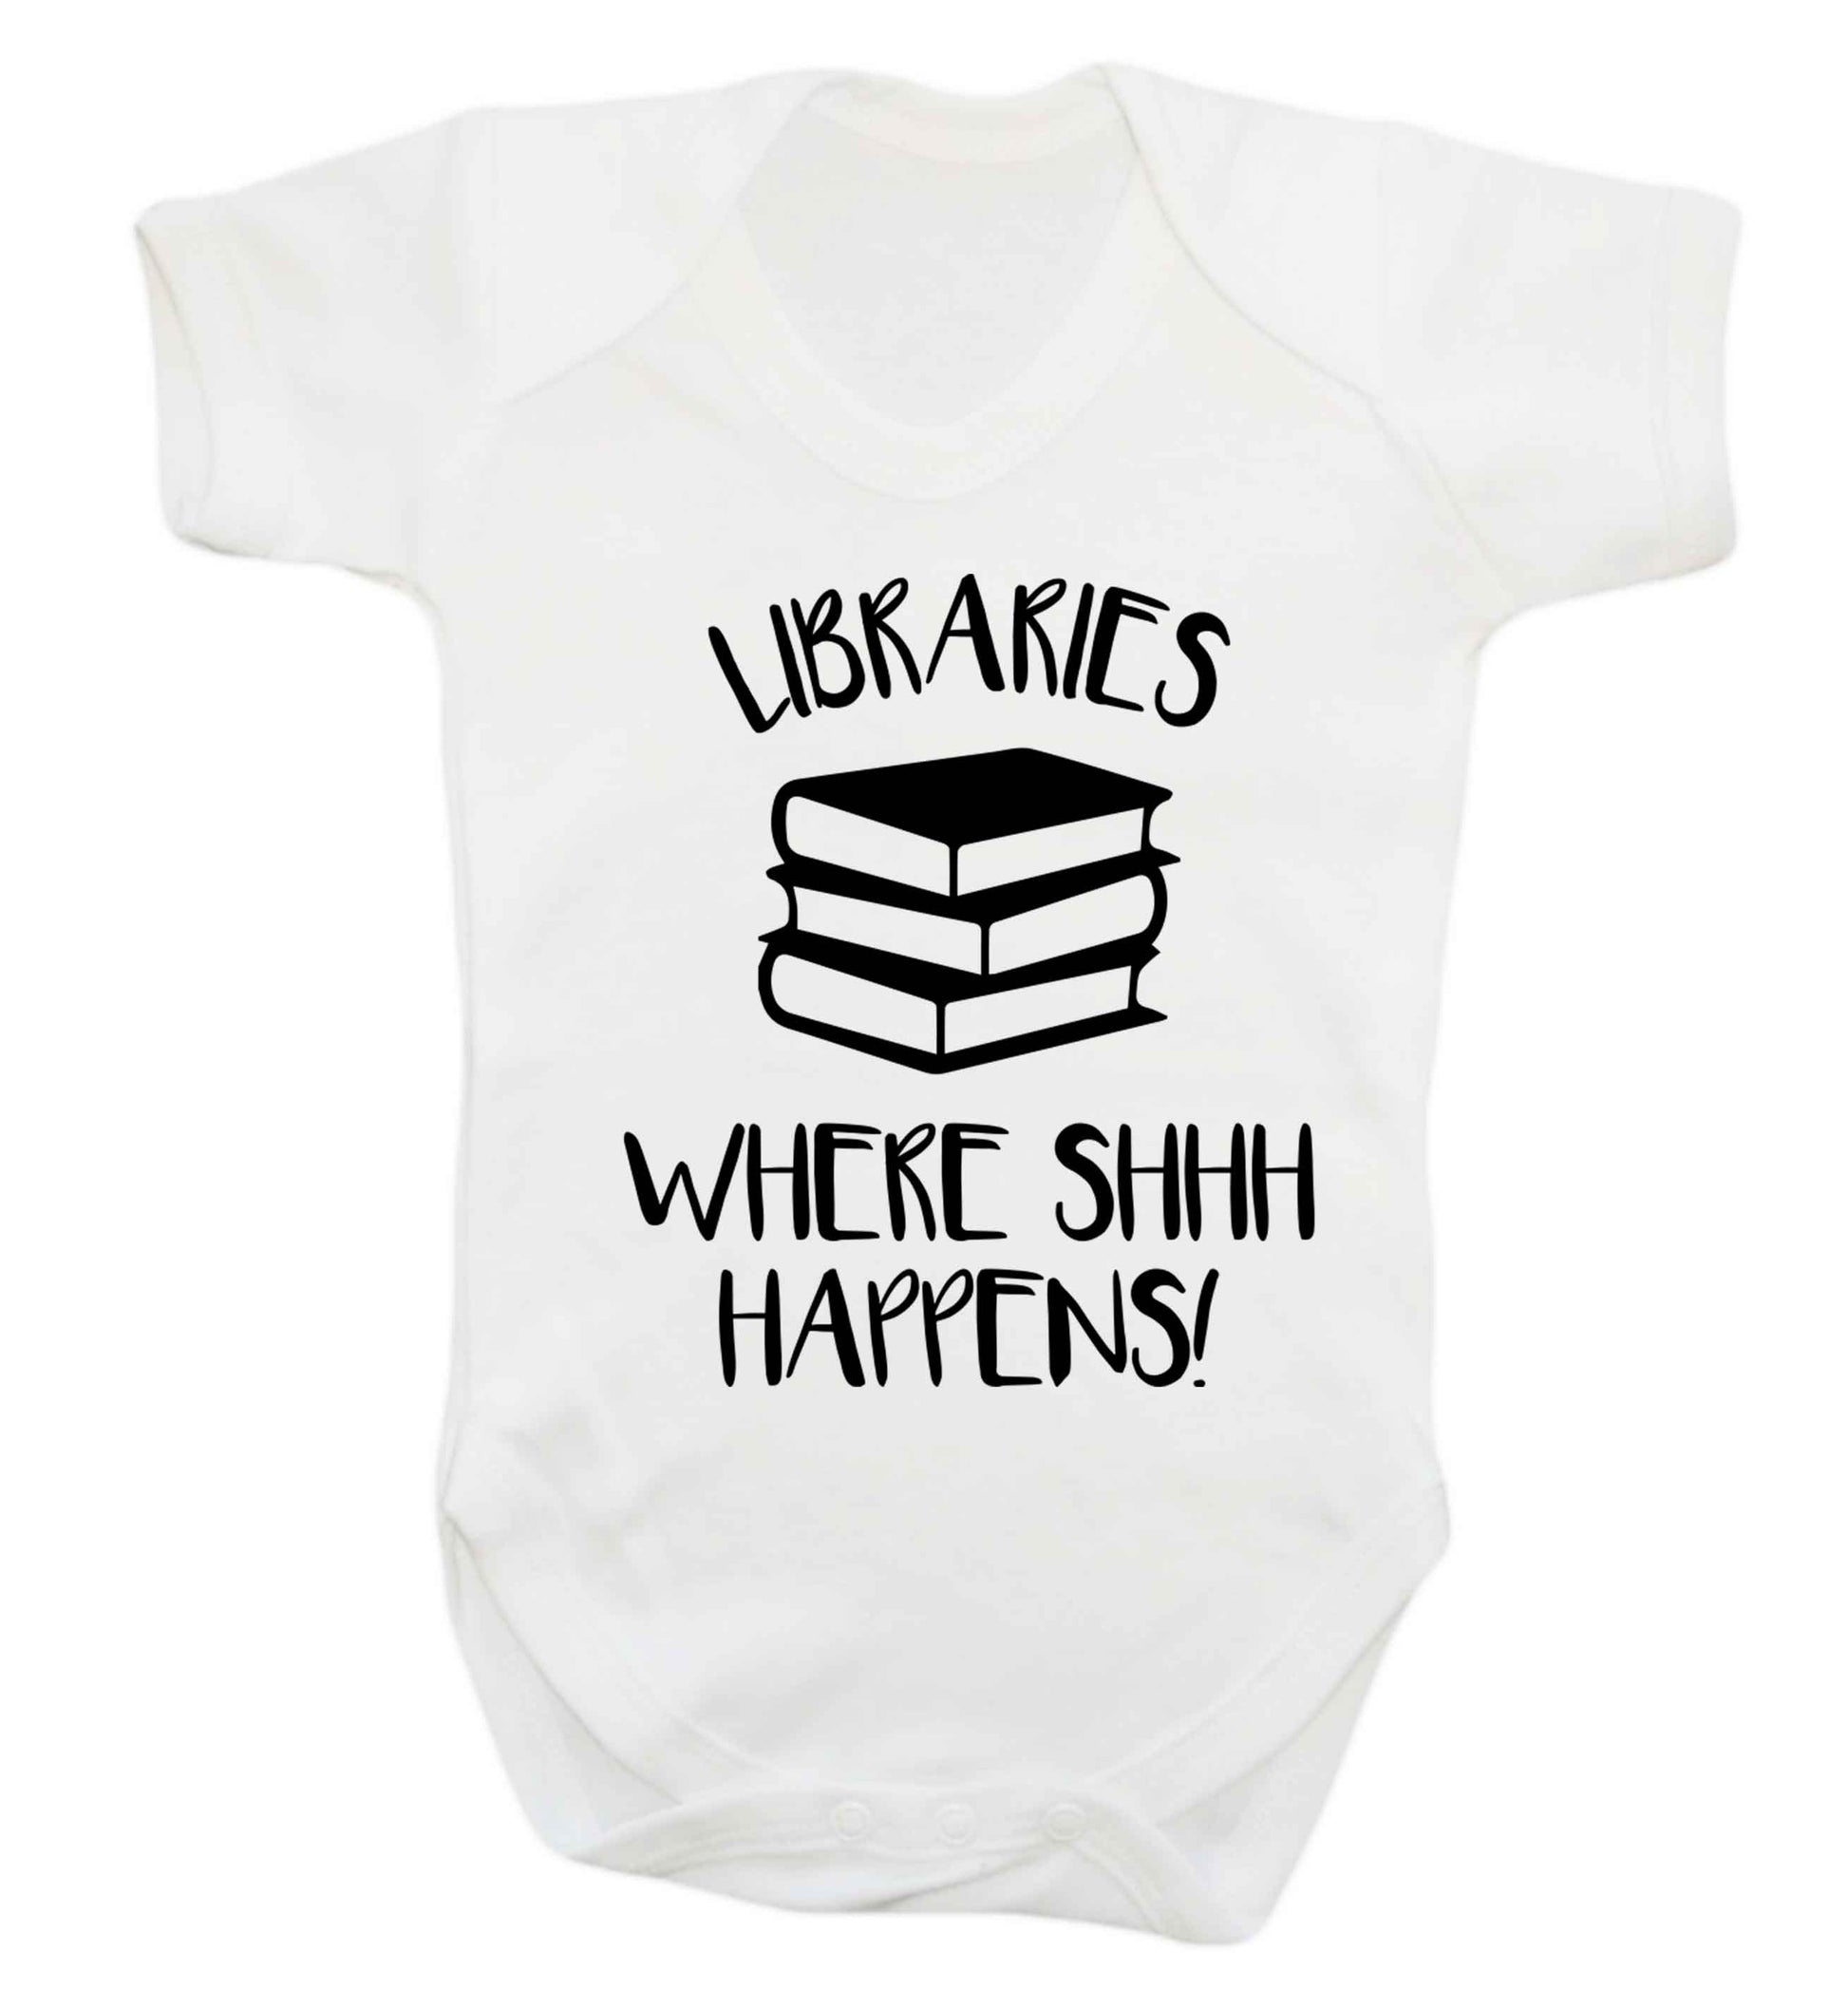 Libraries where shh happens! Baby Vest white 18-24 months